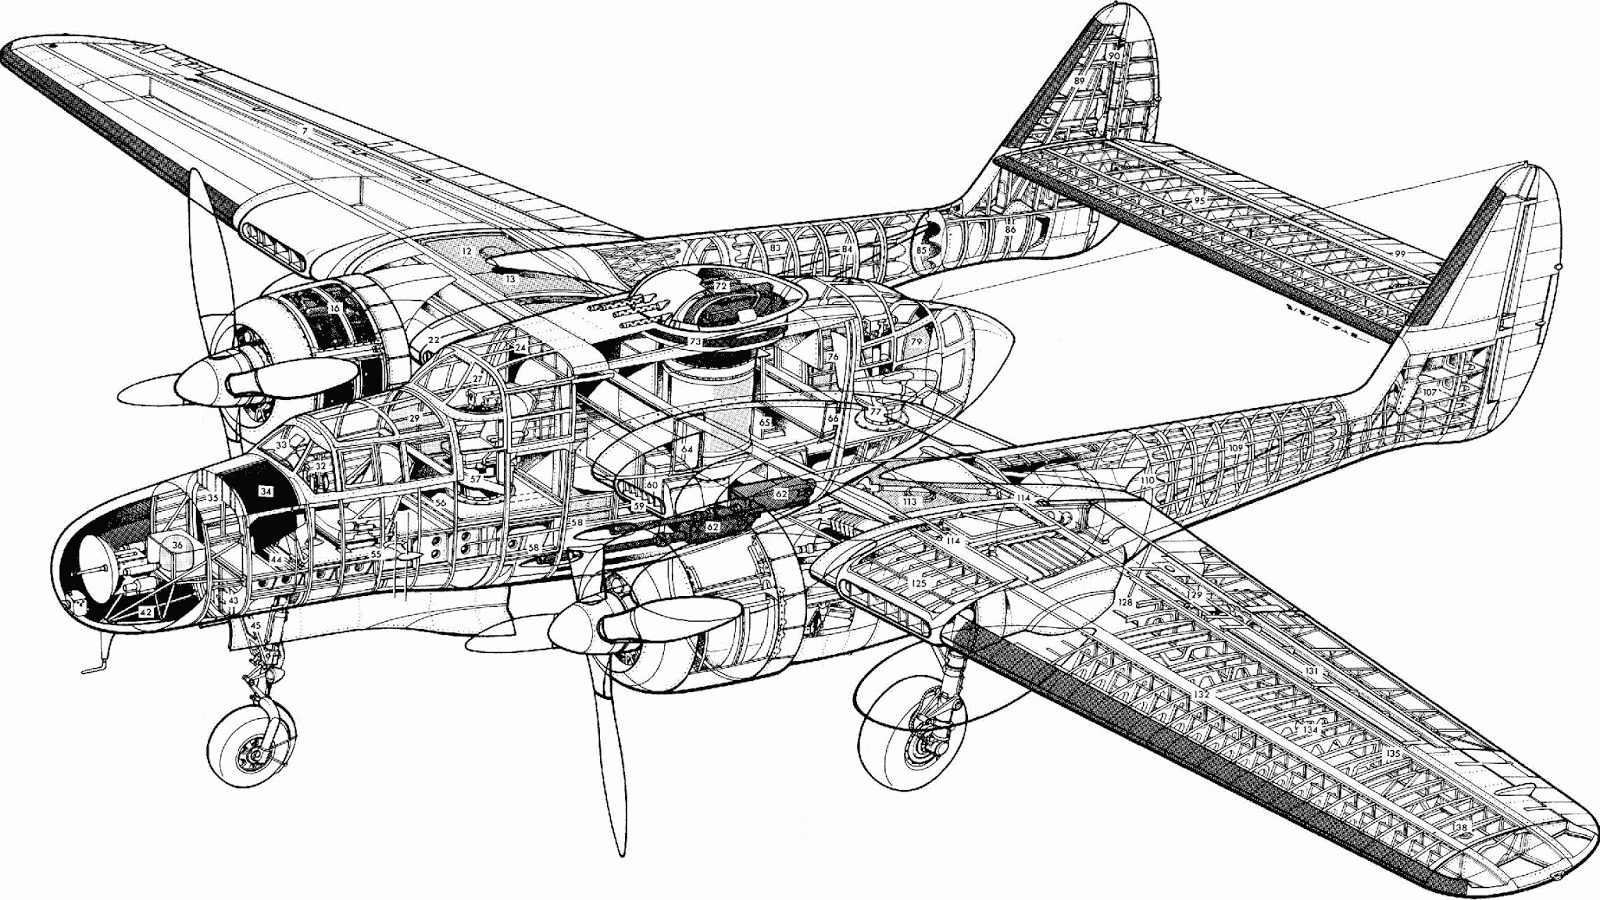 Northrop P-61 Black Widow cutaway